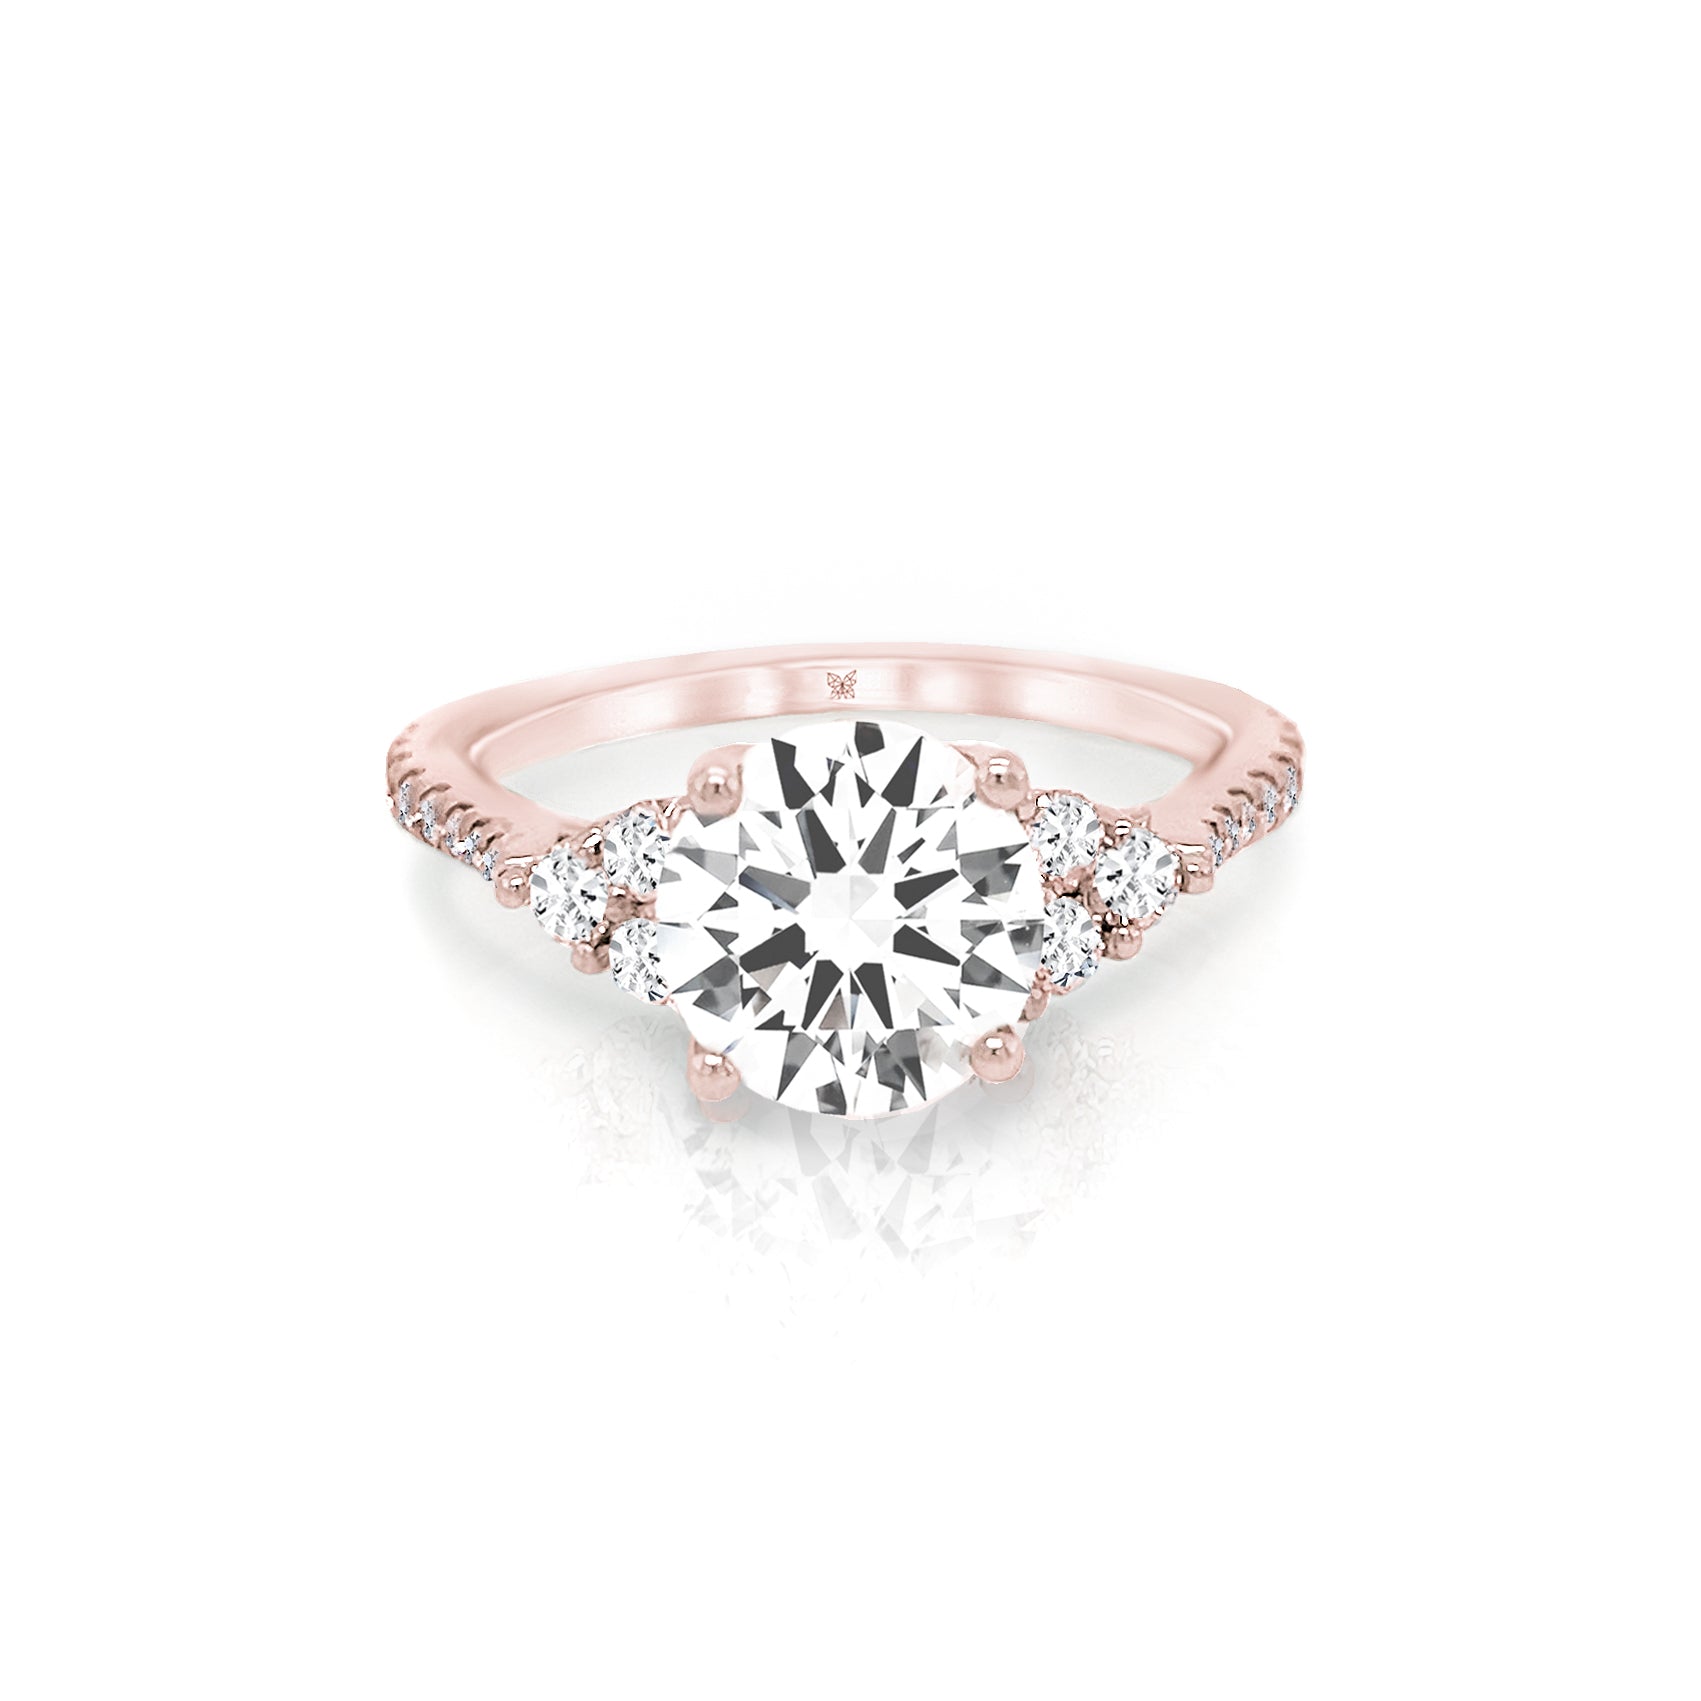 Penelope Diamond Engagement Ring